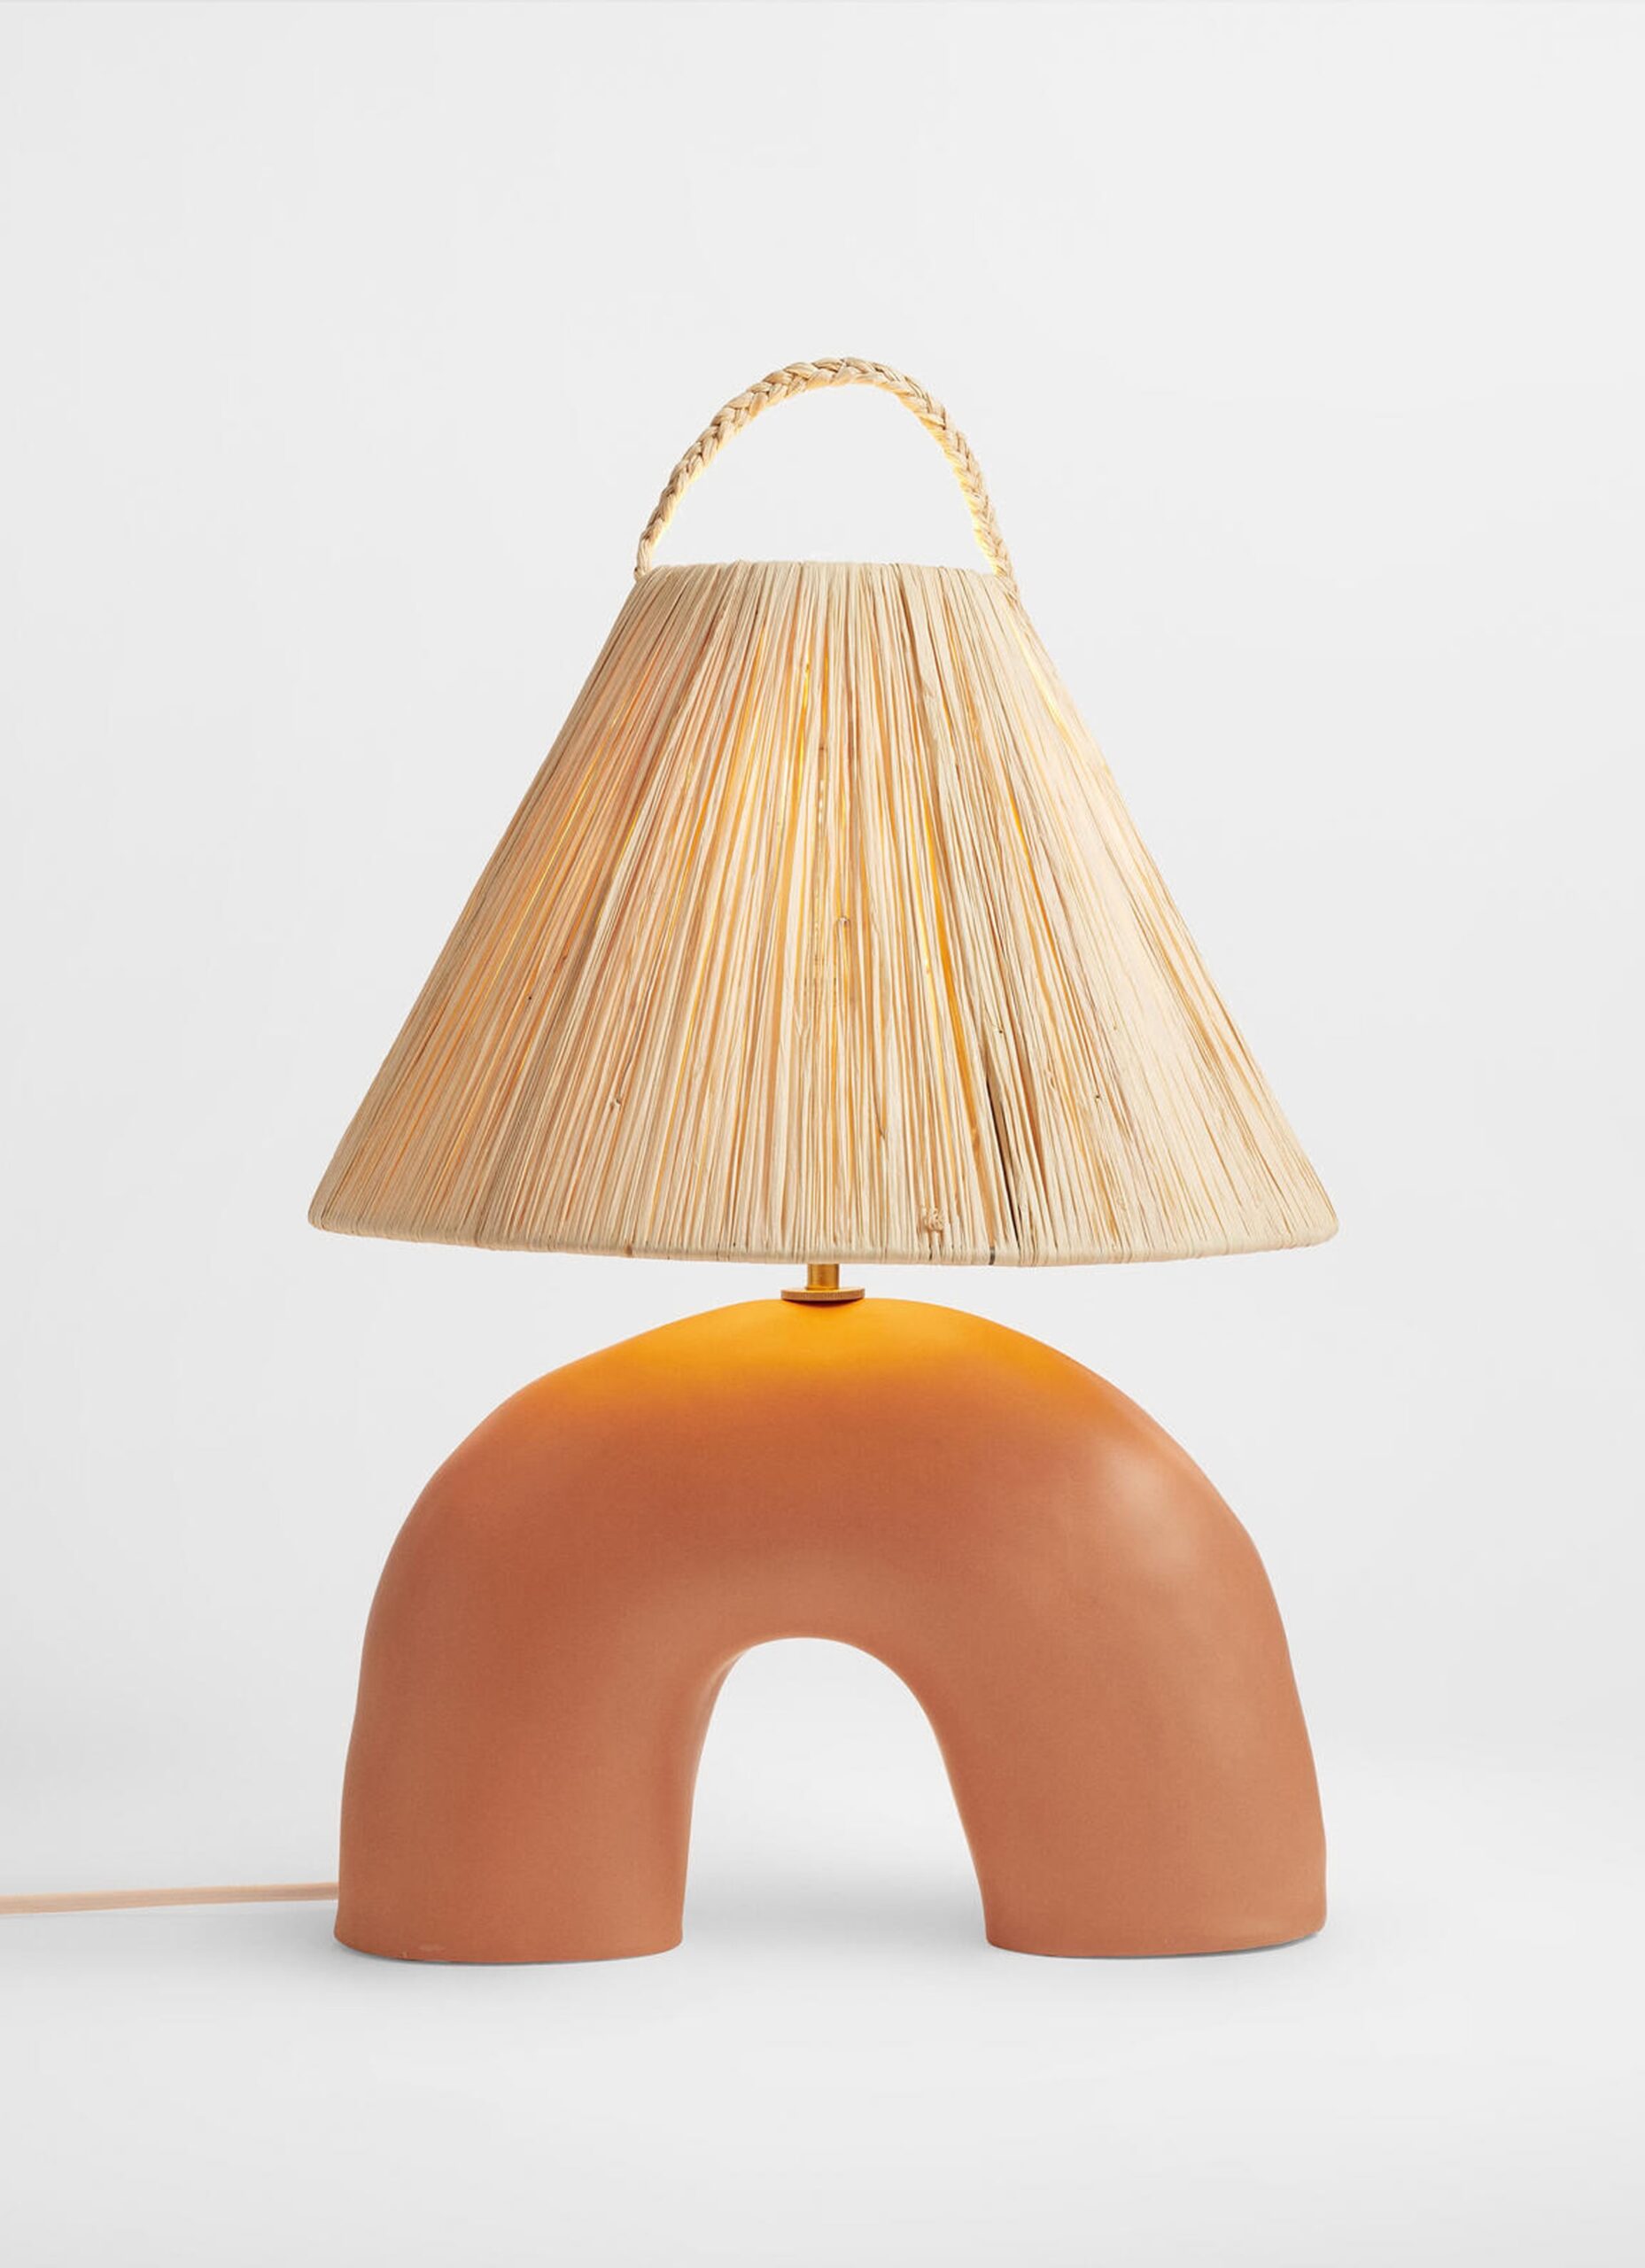 Marta Bonilla - Handmade Stoneware - Volta Lamp - Red clay